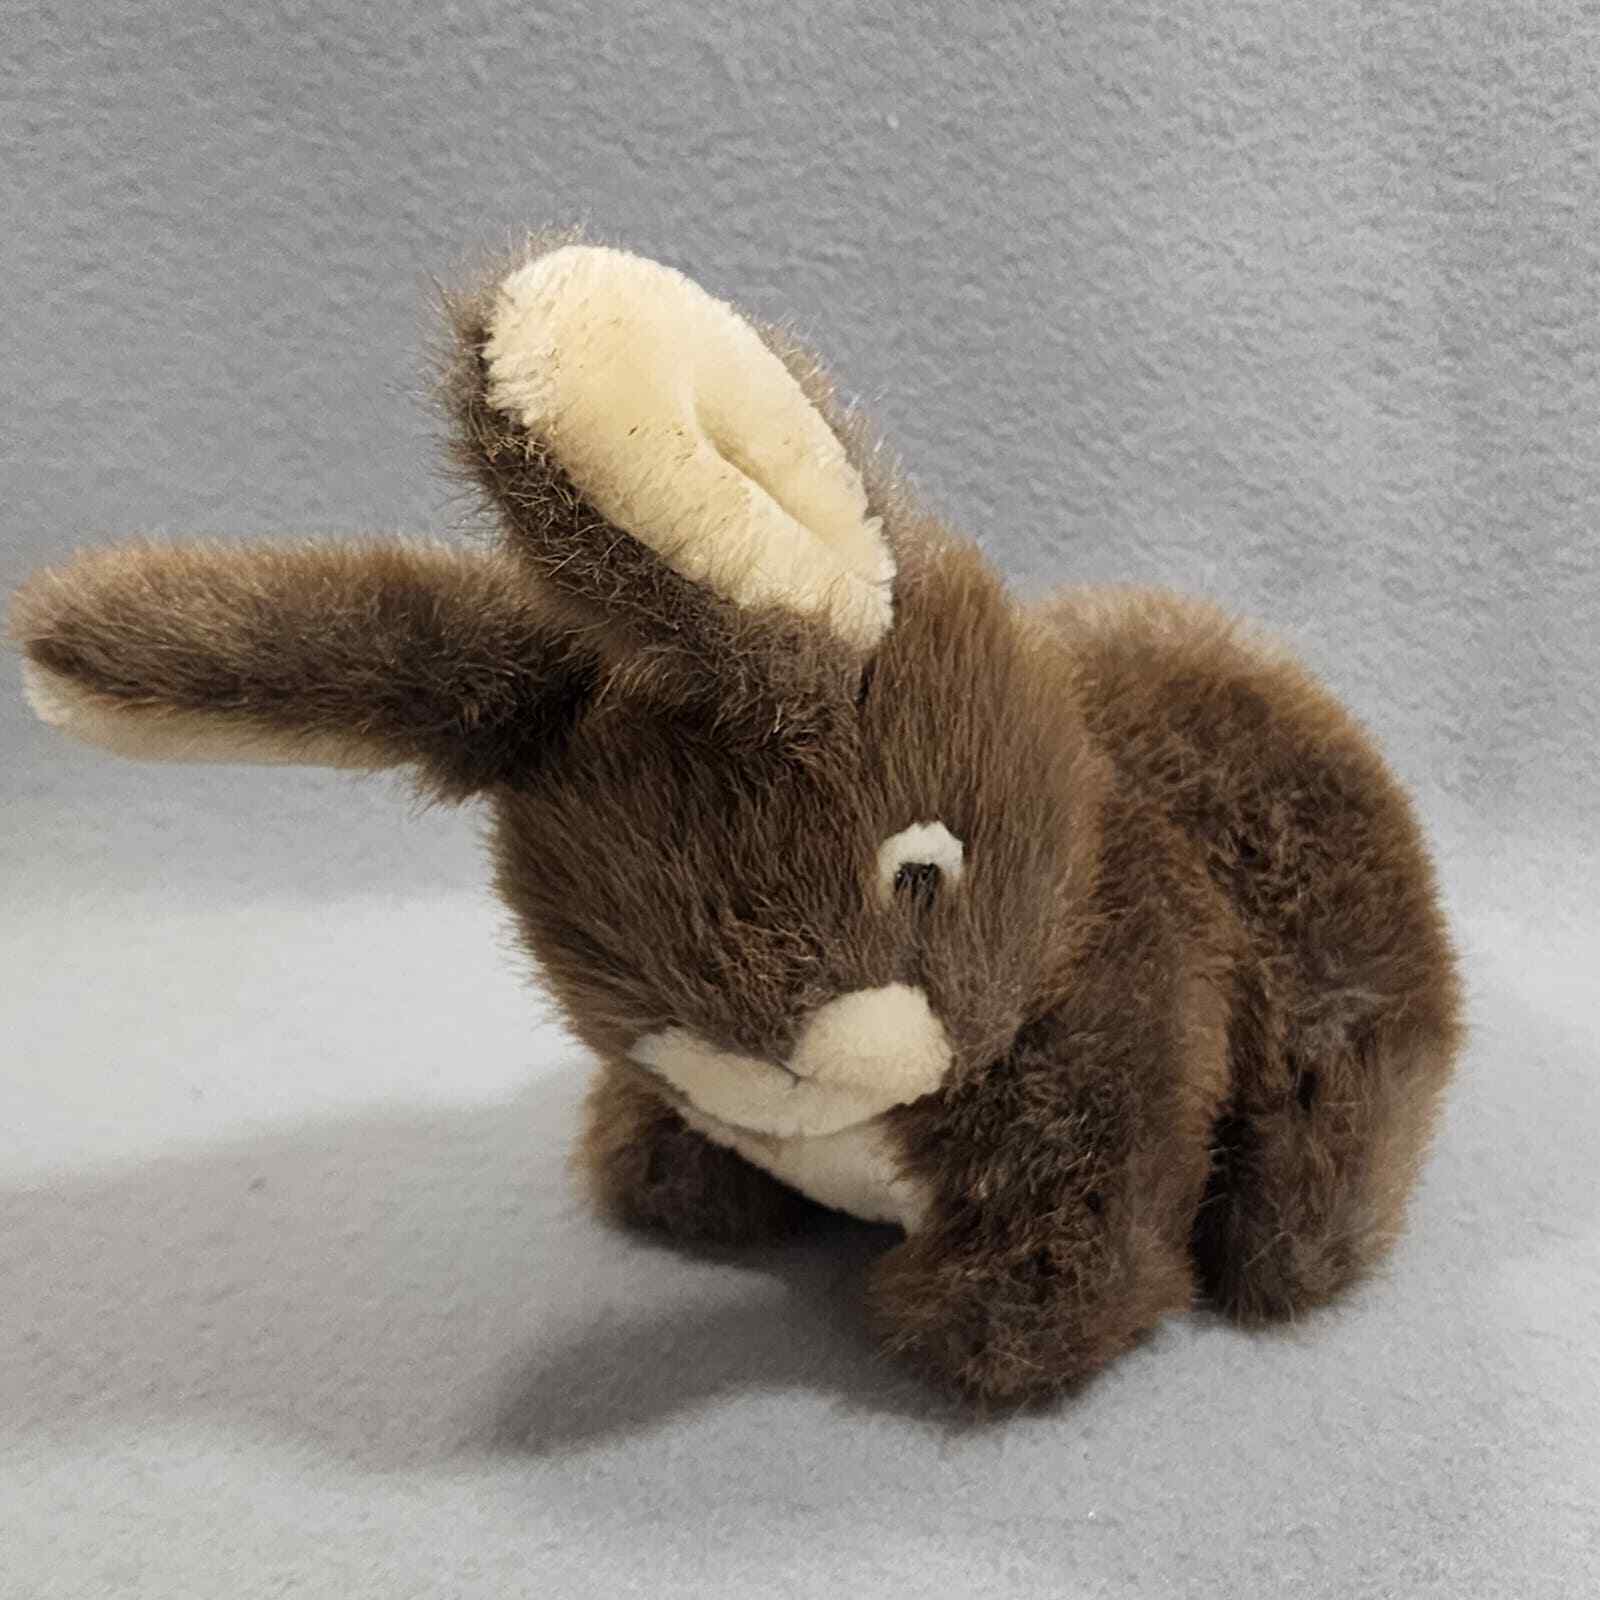 Sugar Loaf Toy Plush Brown White Bunny Rabbit Stuffed Animal Vintage 1988 EASTER - $7.24